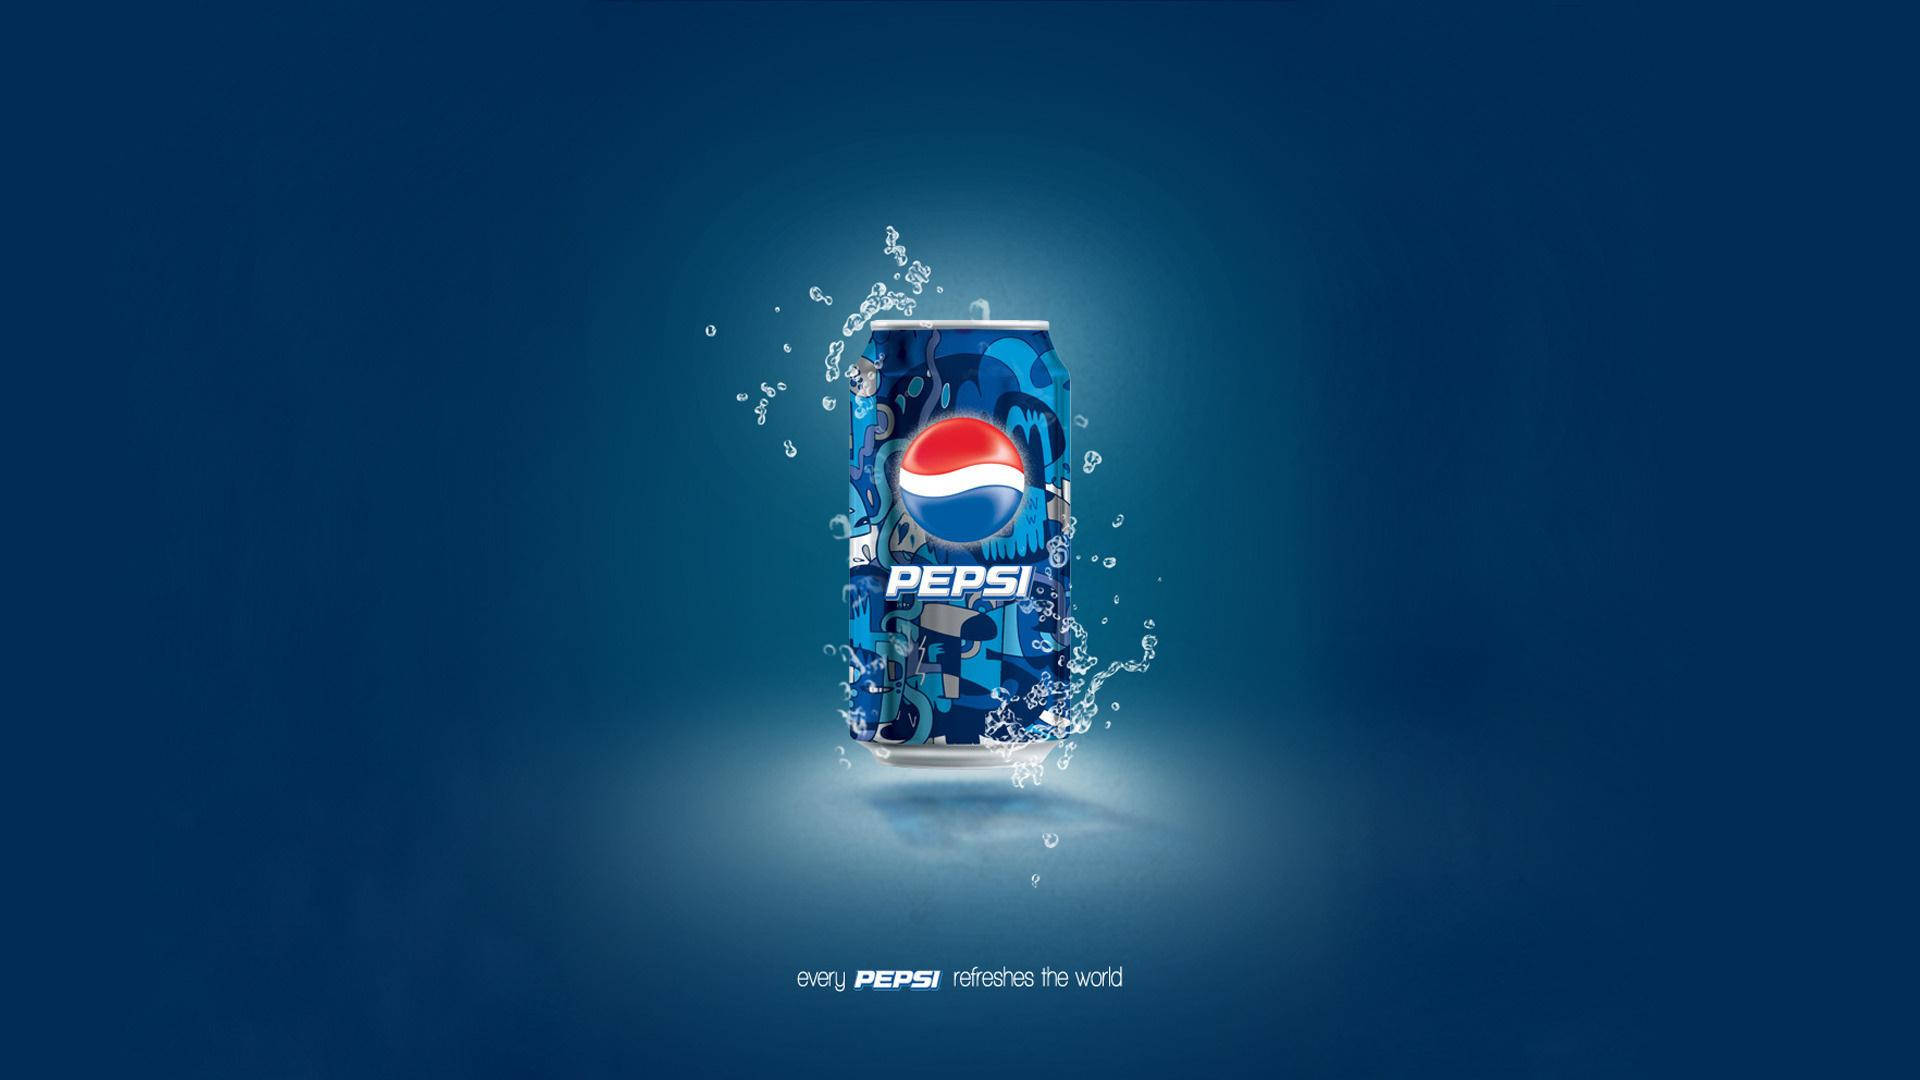 Pepsi For Beverage Brands Wallpaper